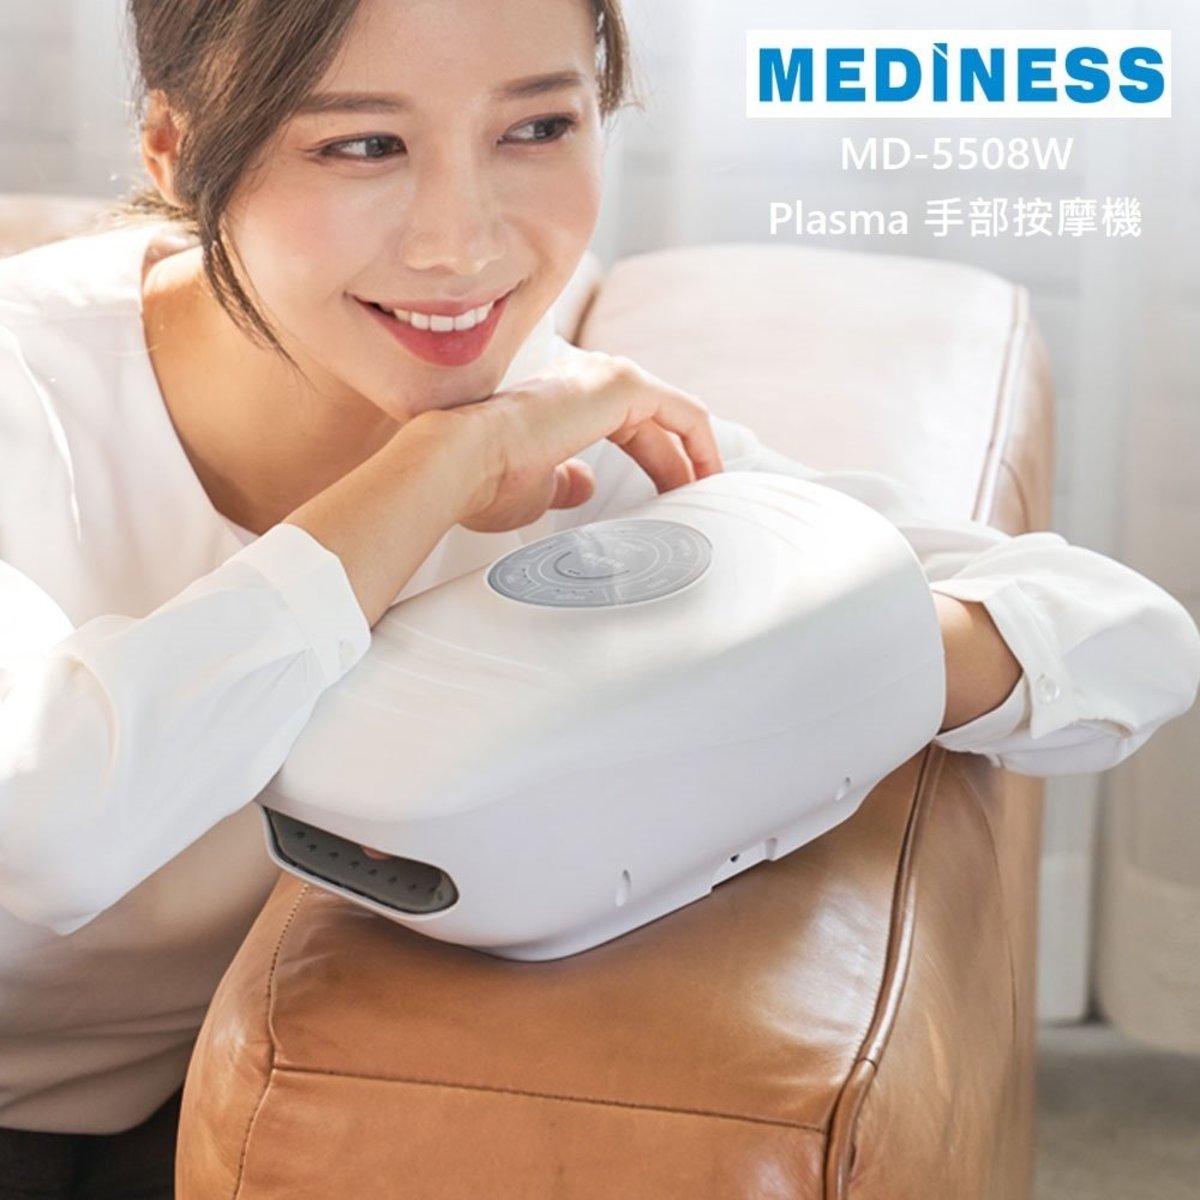 Mediness - MD-5508W Infinity Plasma 手部按摩機